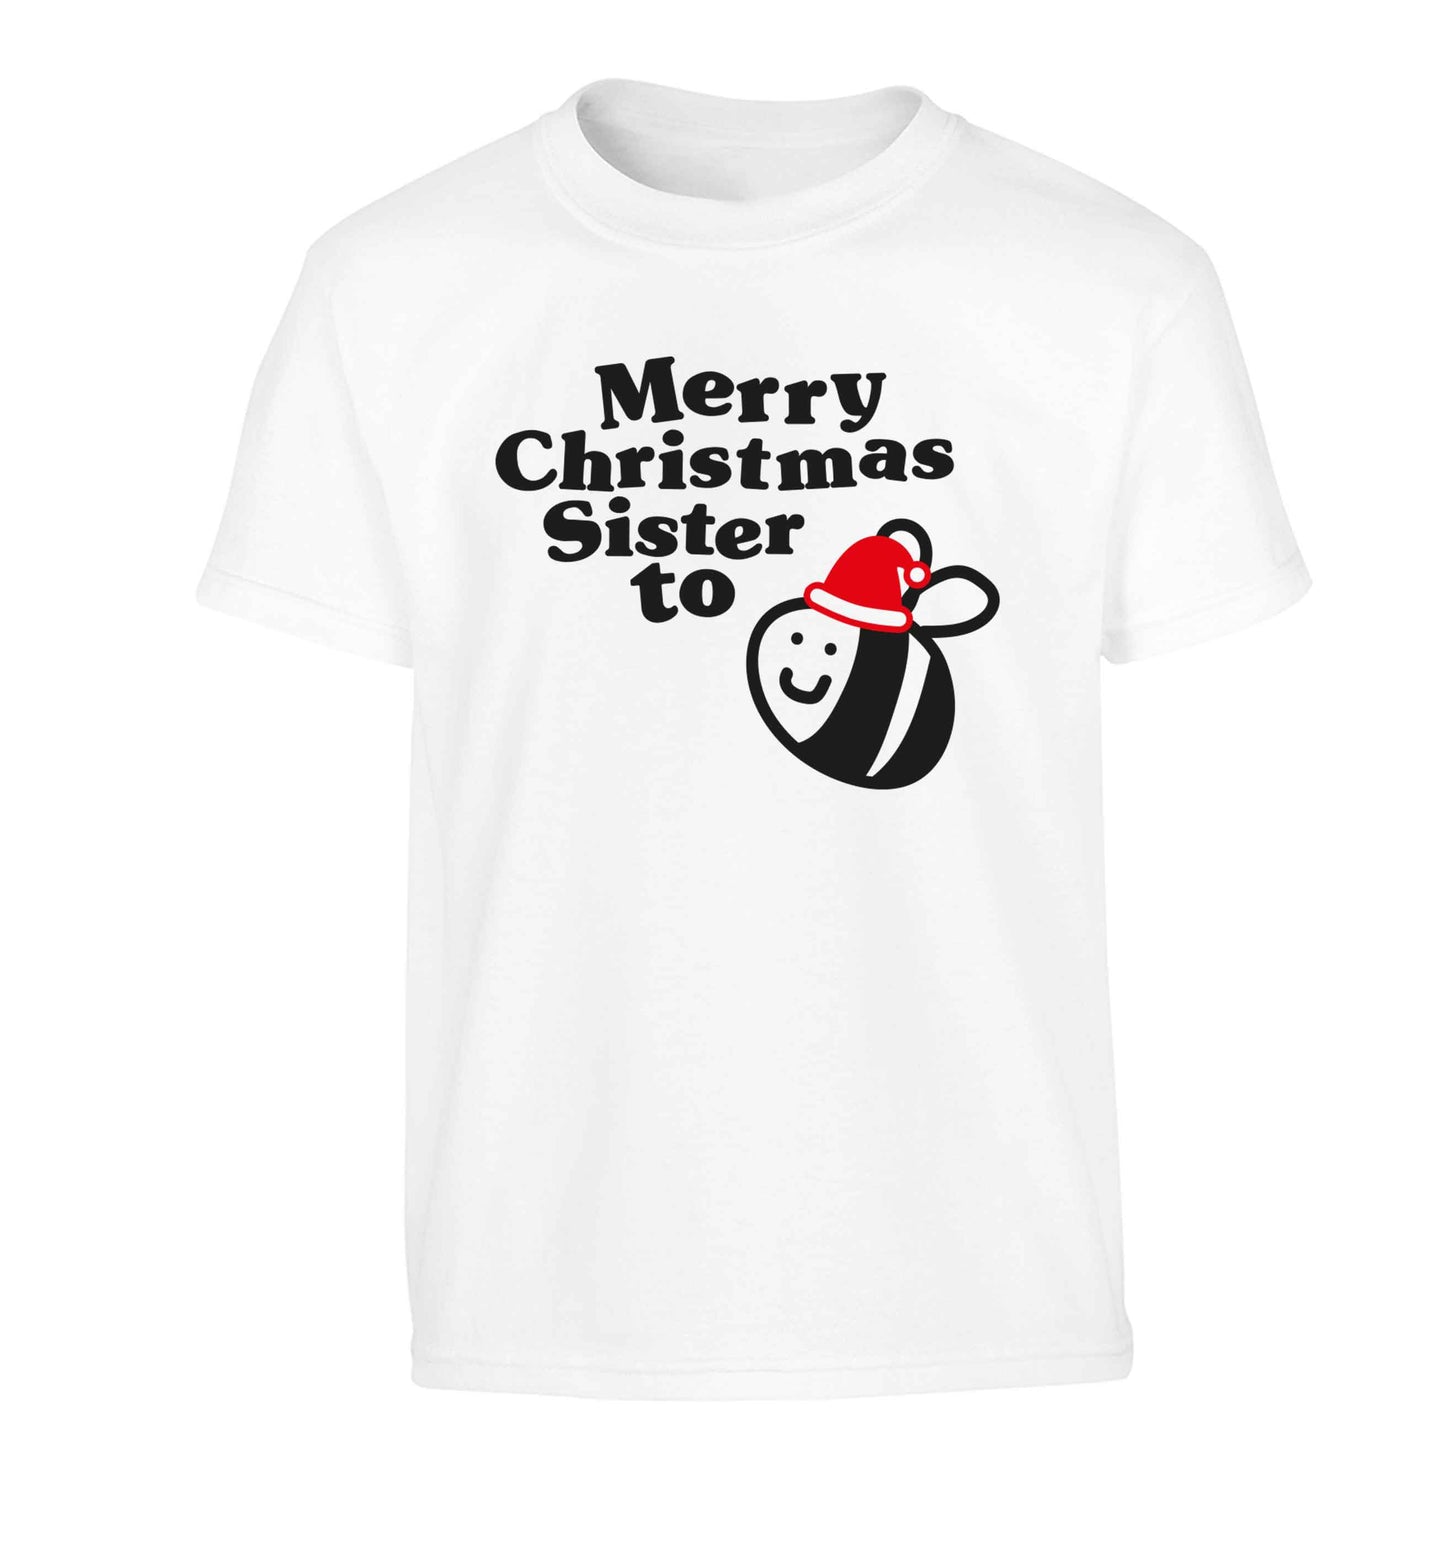 Merry Christmas sister to be Children's white Tshirt 12-13 Years